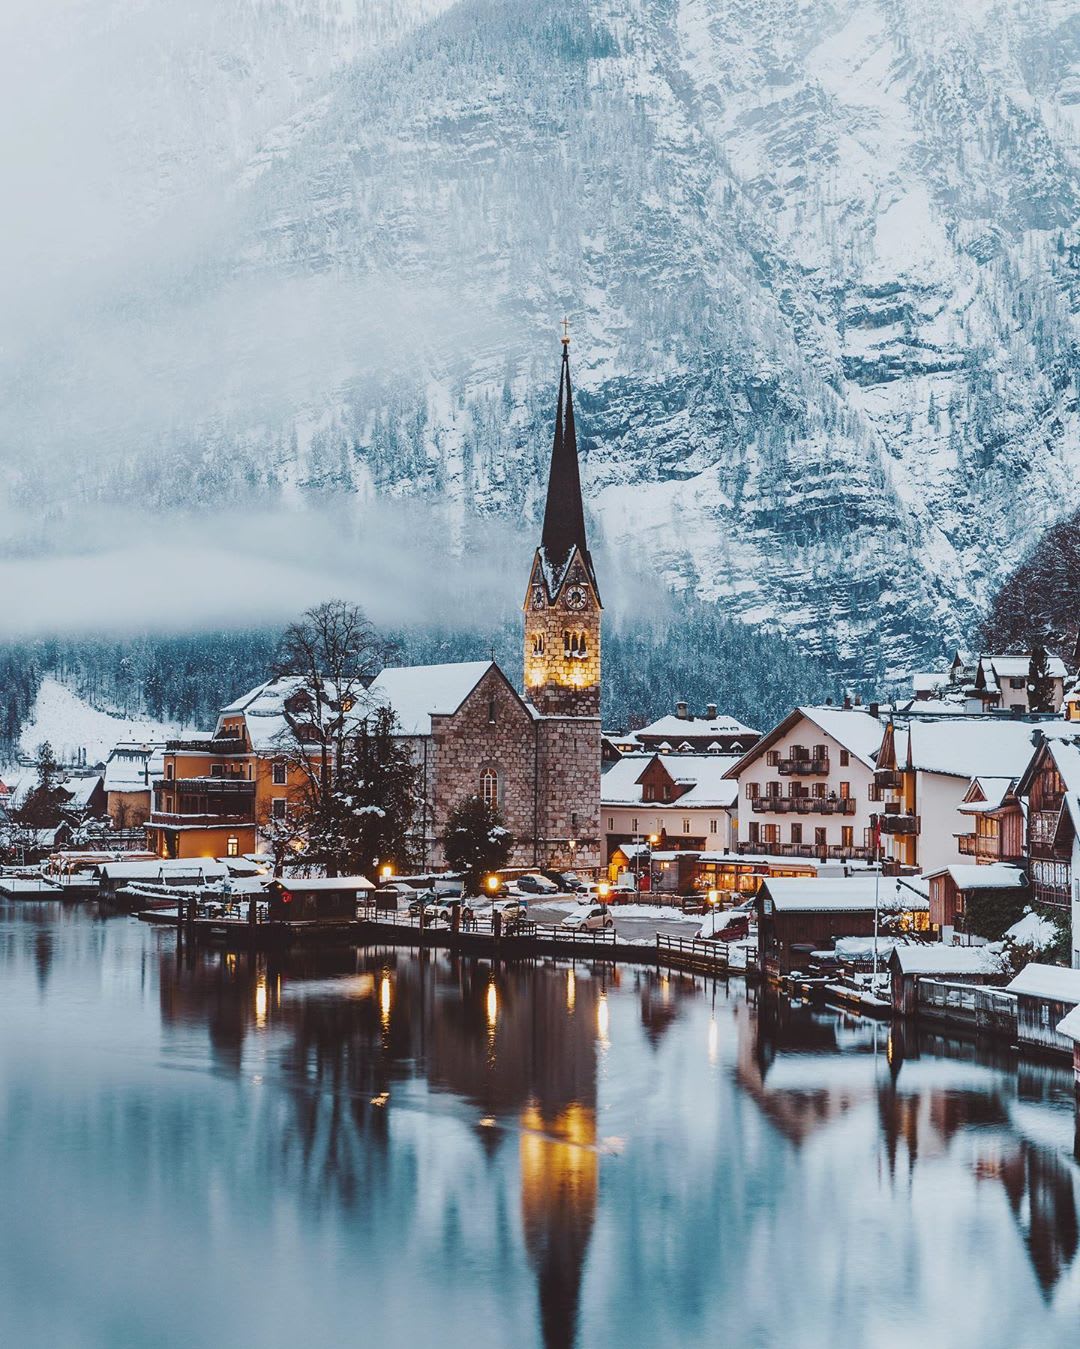 This Town In Austria